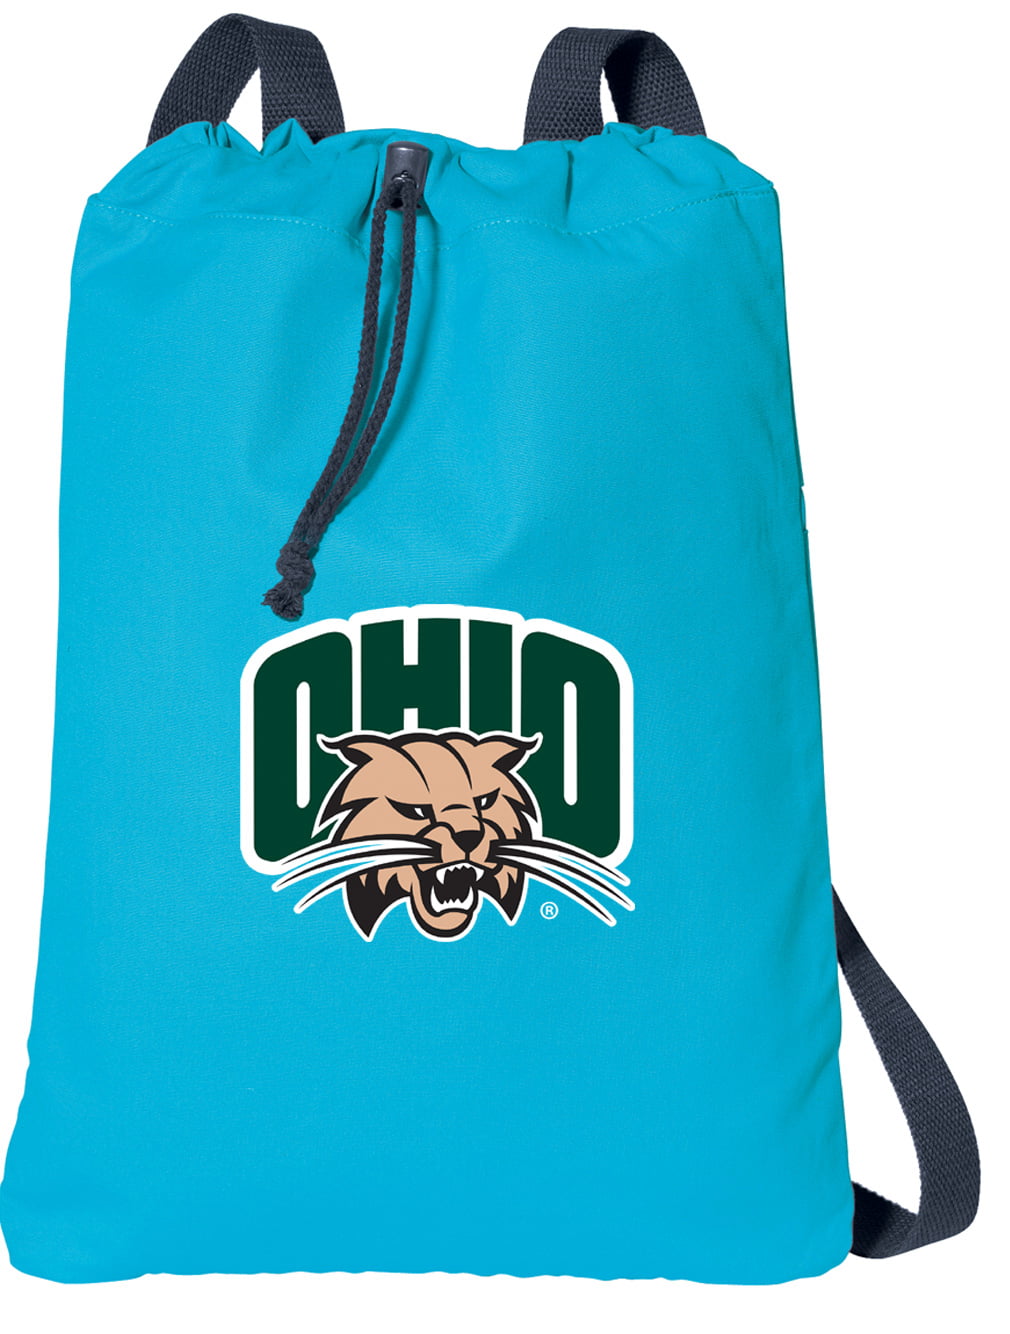 Broad Bay Ohio University Laundry Bag Ohio Bobcats Clothes Bags 